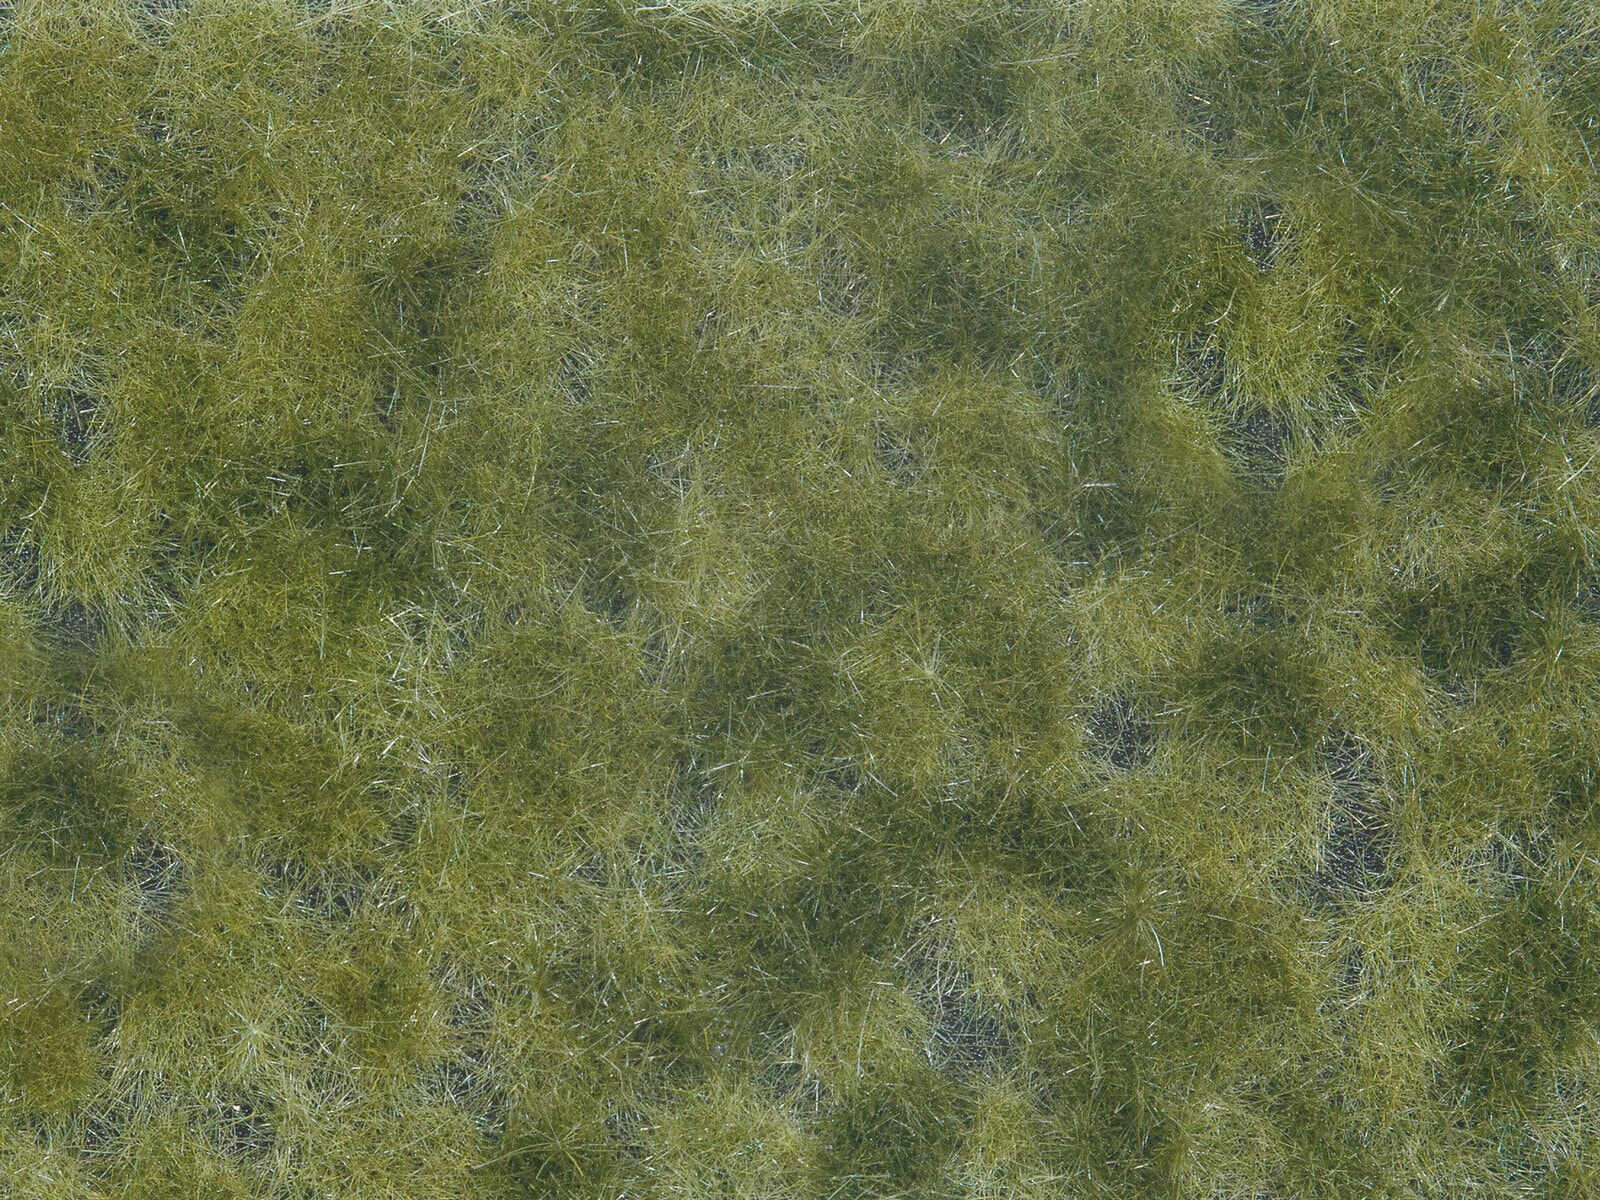 NOCH Groundcover Foliage - Medium Green - Green